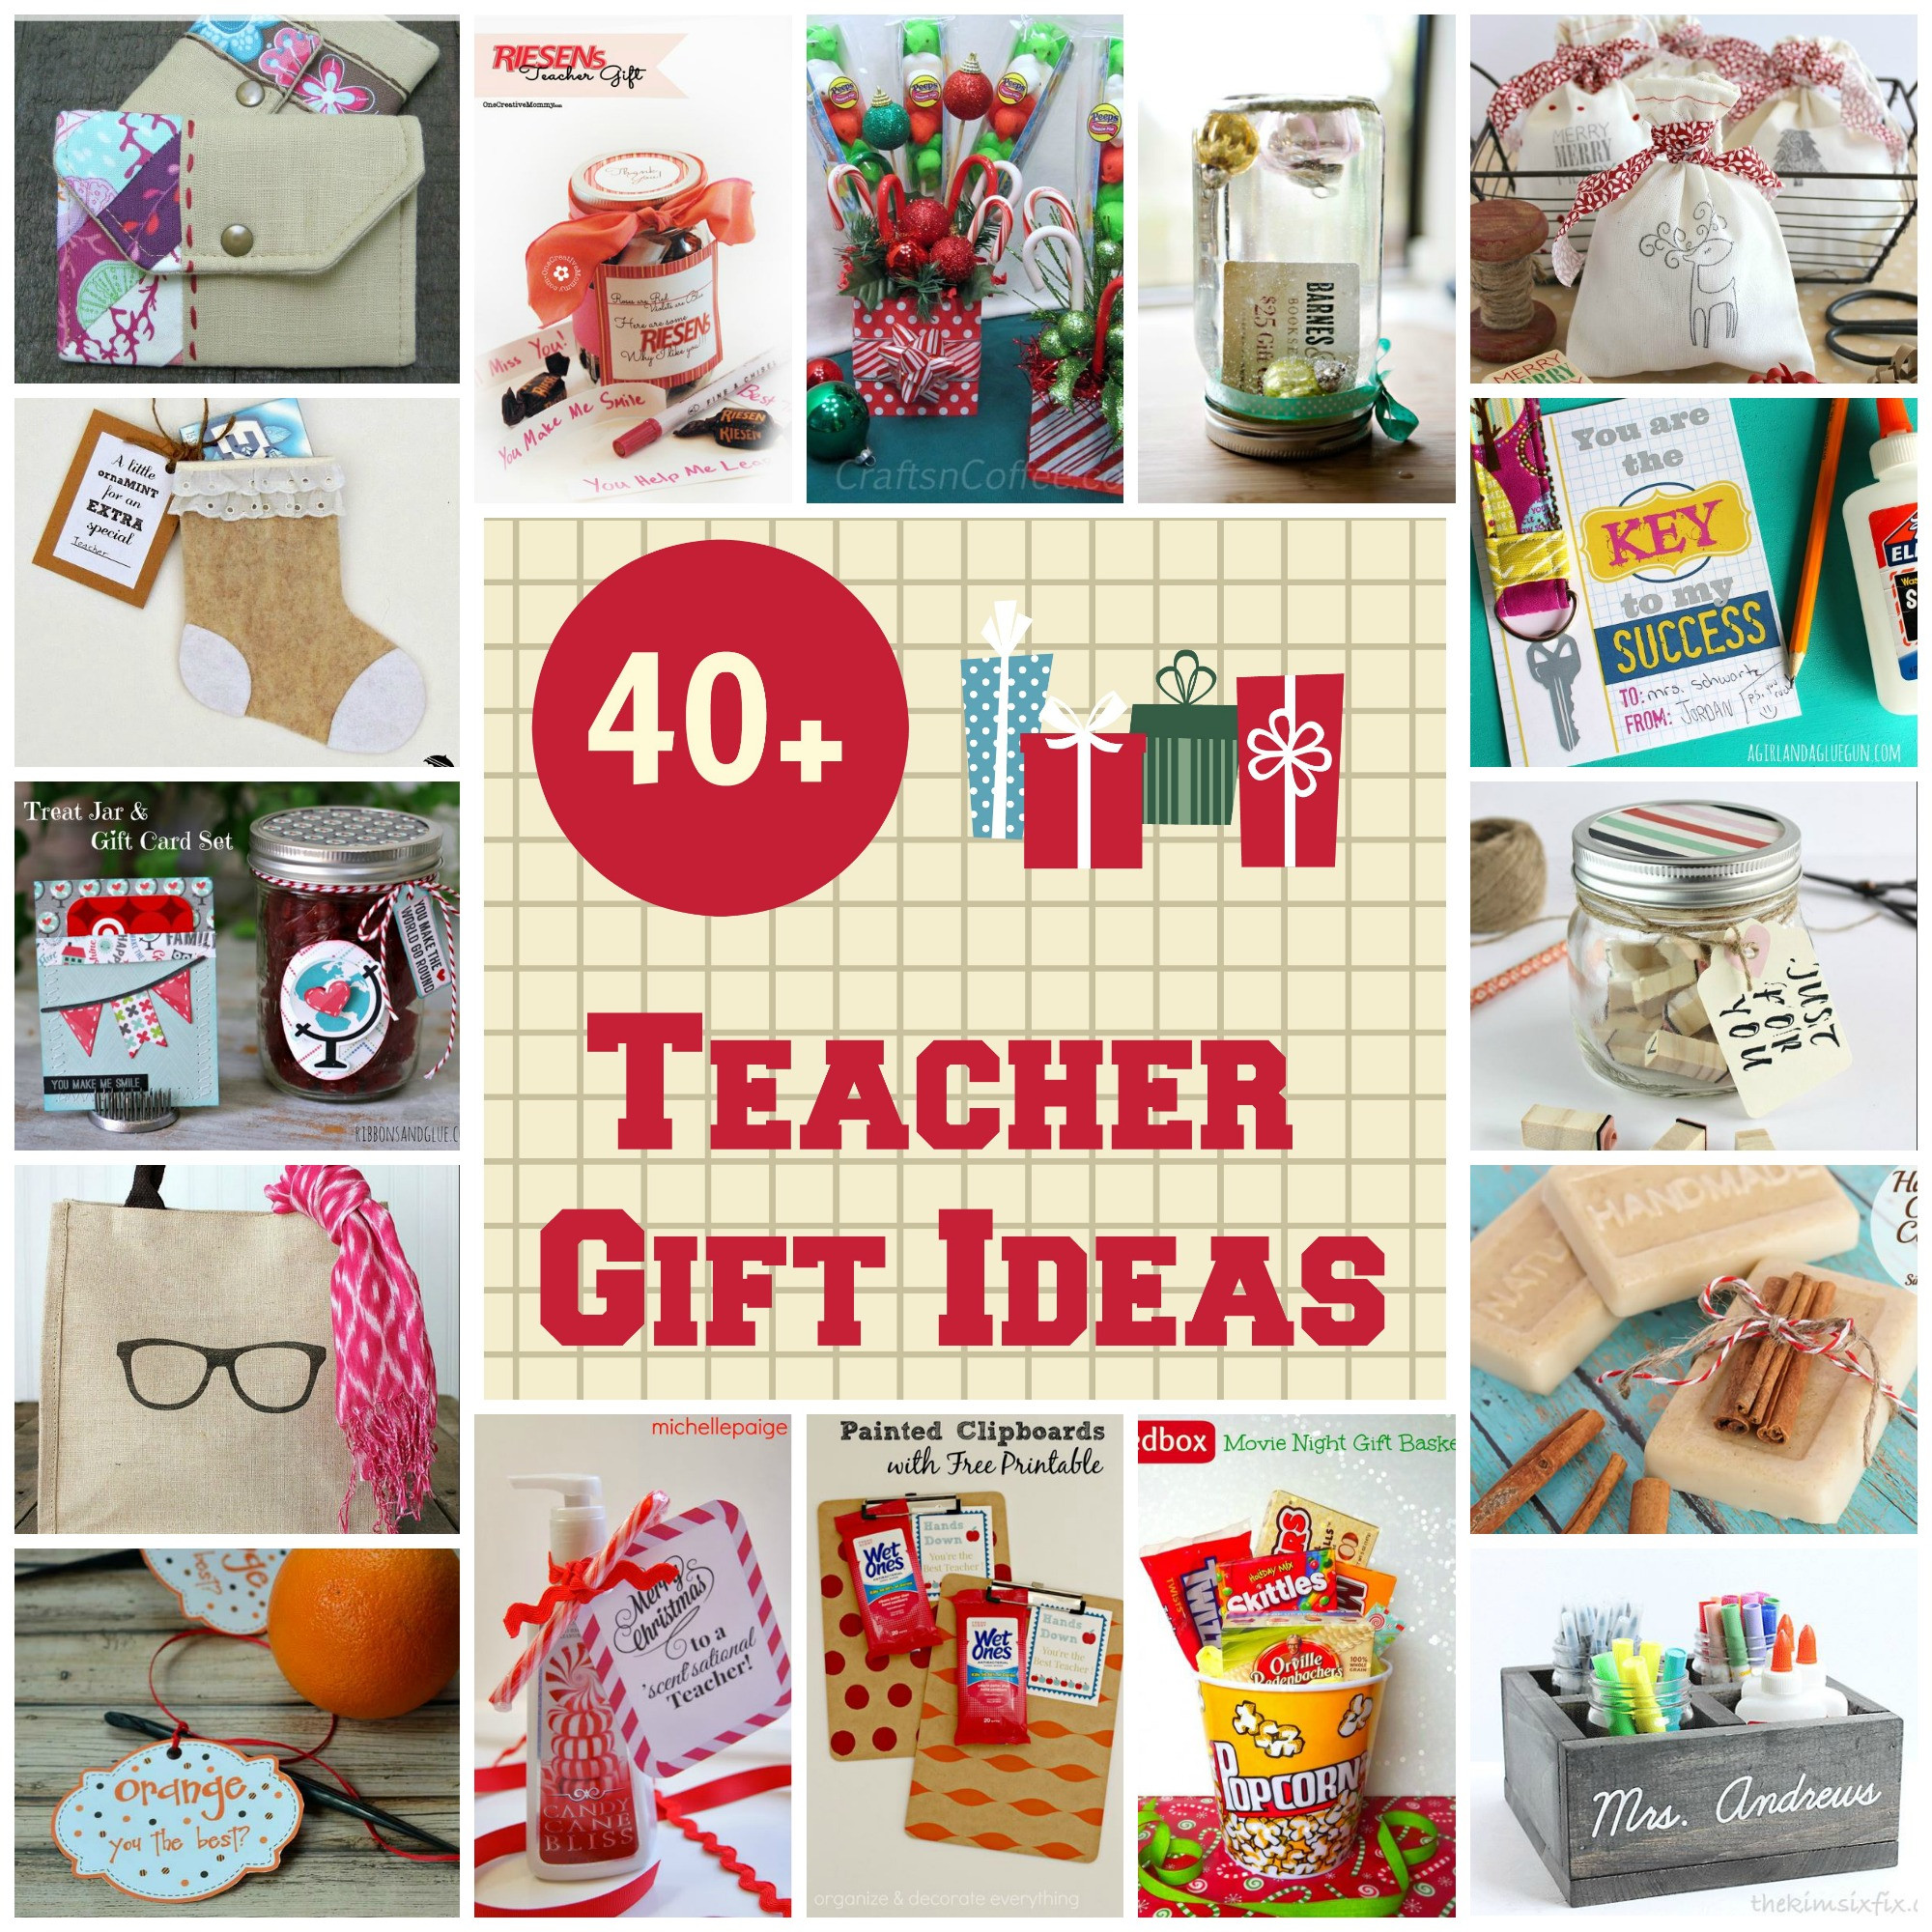 Best ideas about Gift Ideas For Teachers
. Save or Pin 40 teacher t ideas Now.